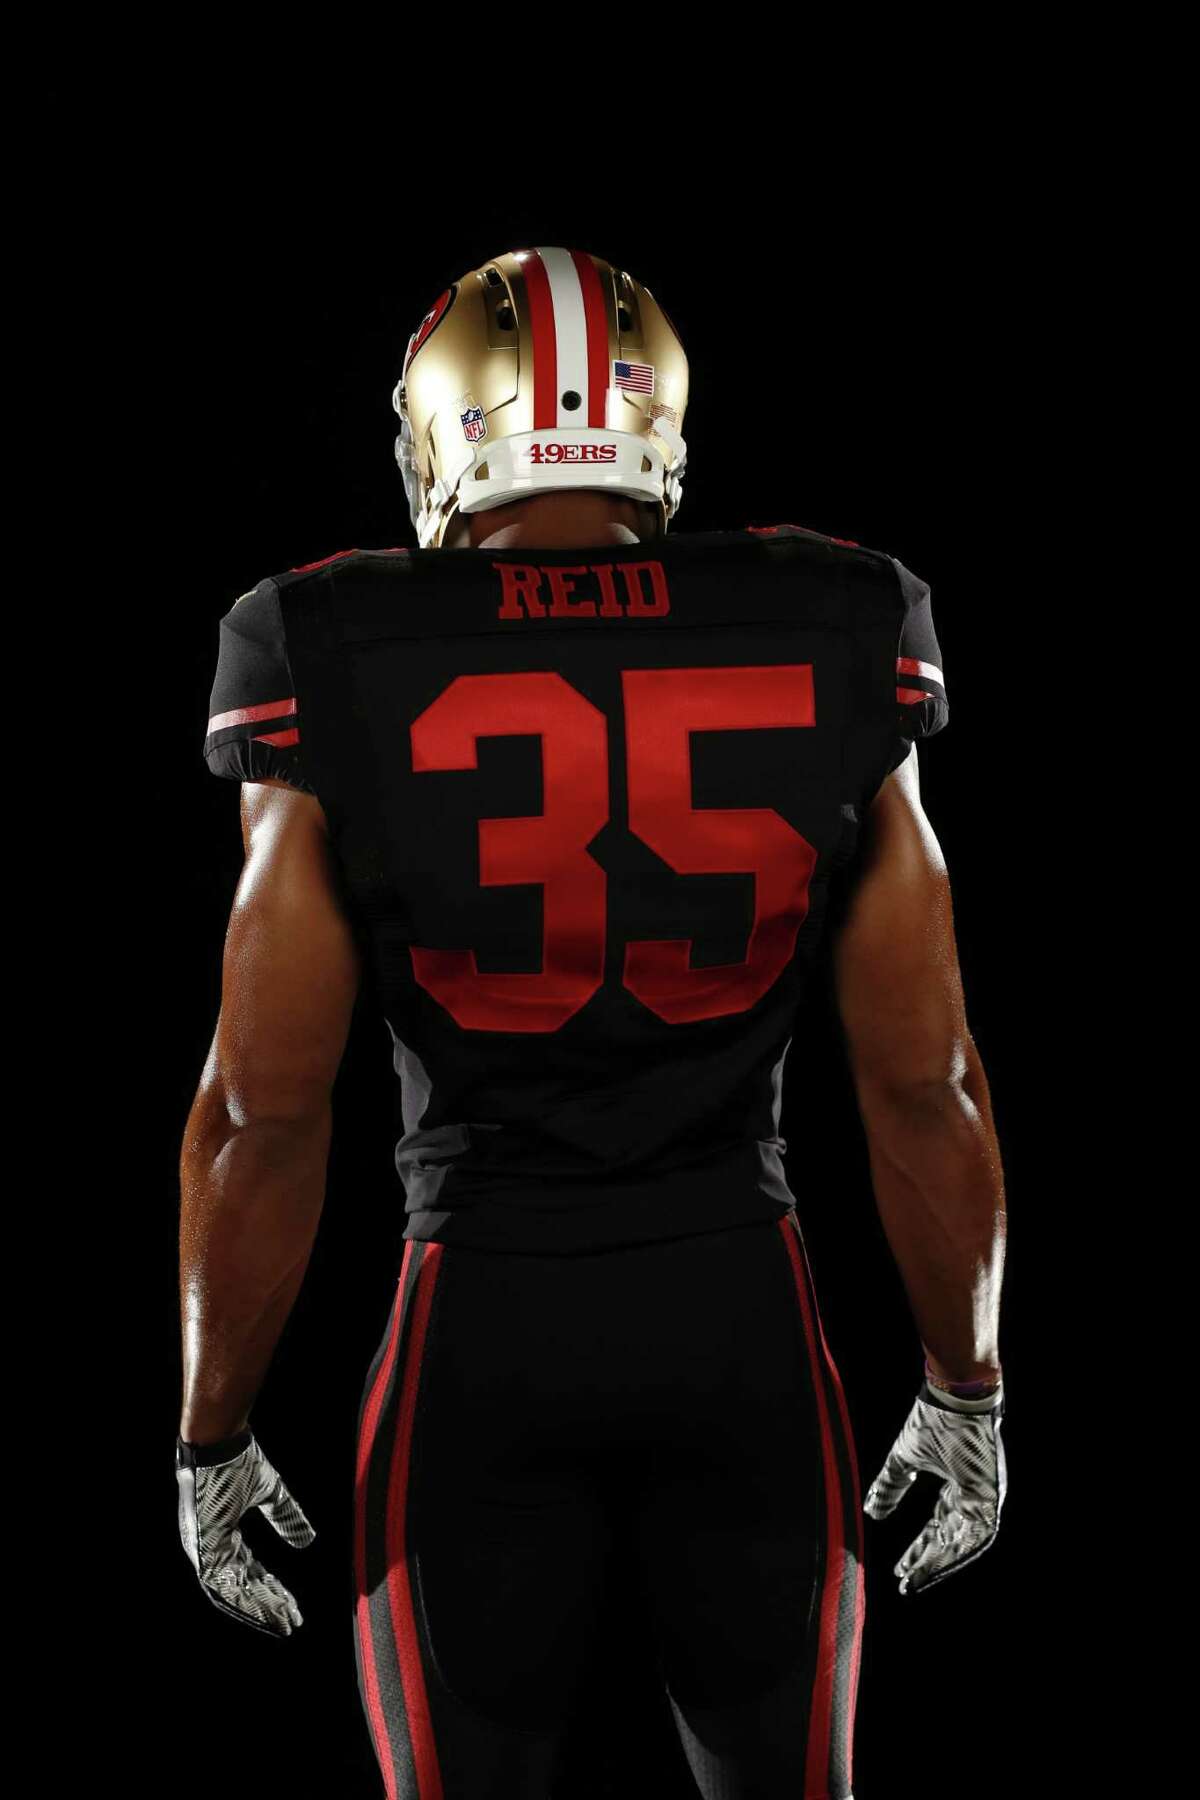 49ers’ alternate uniforms turn to the dark side